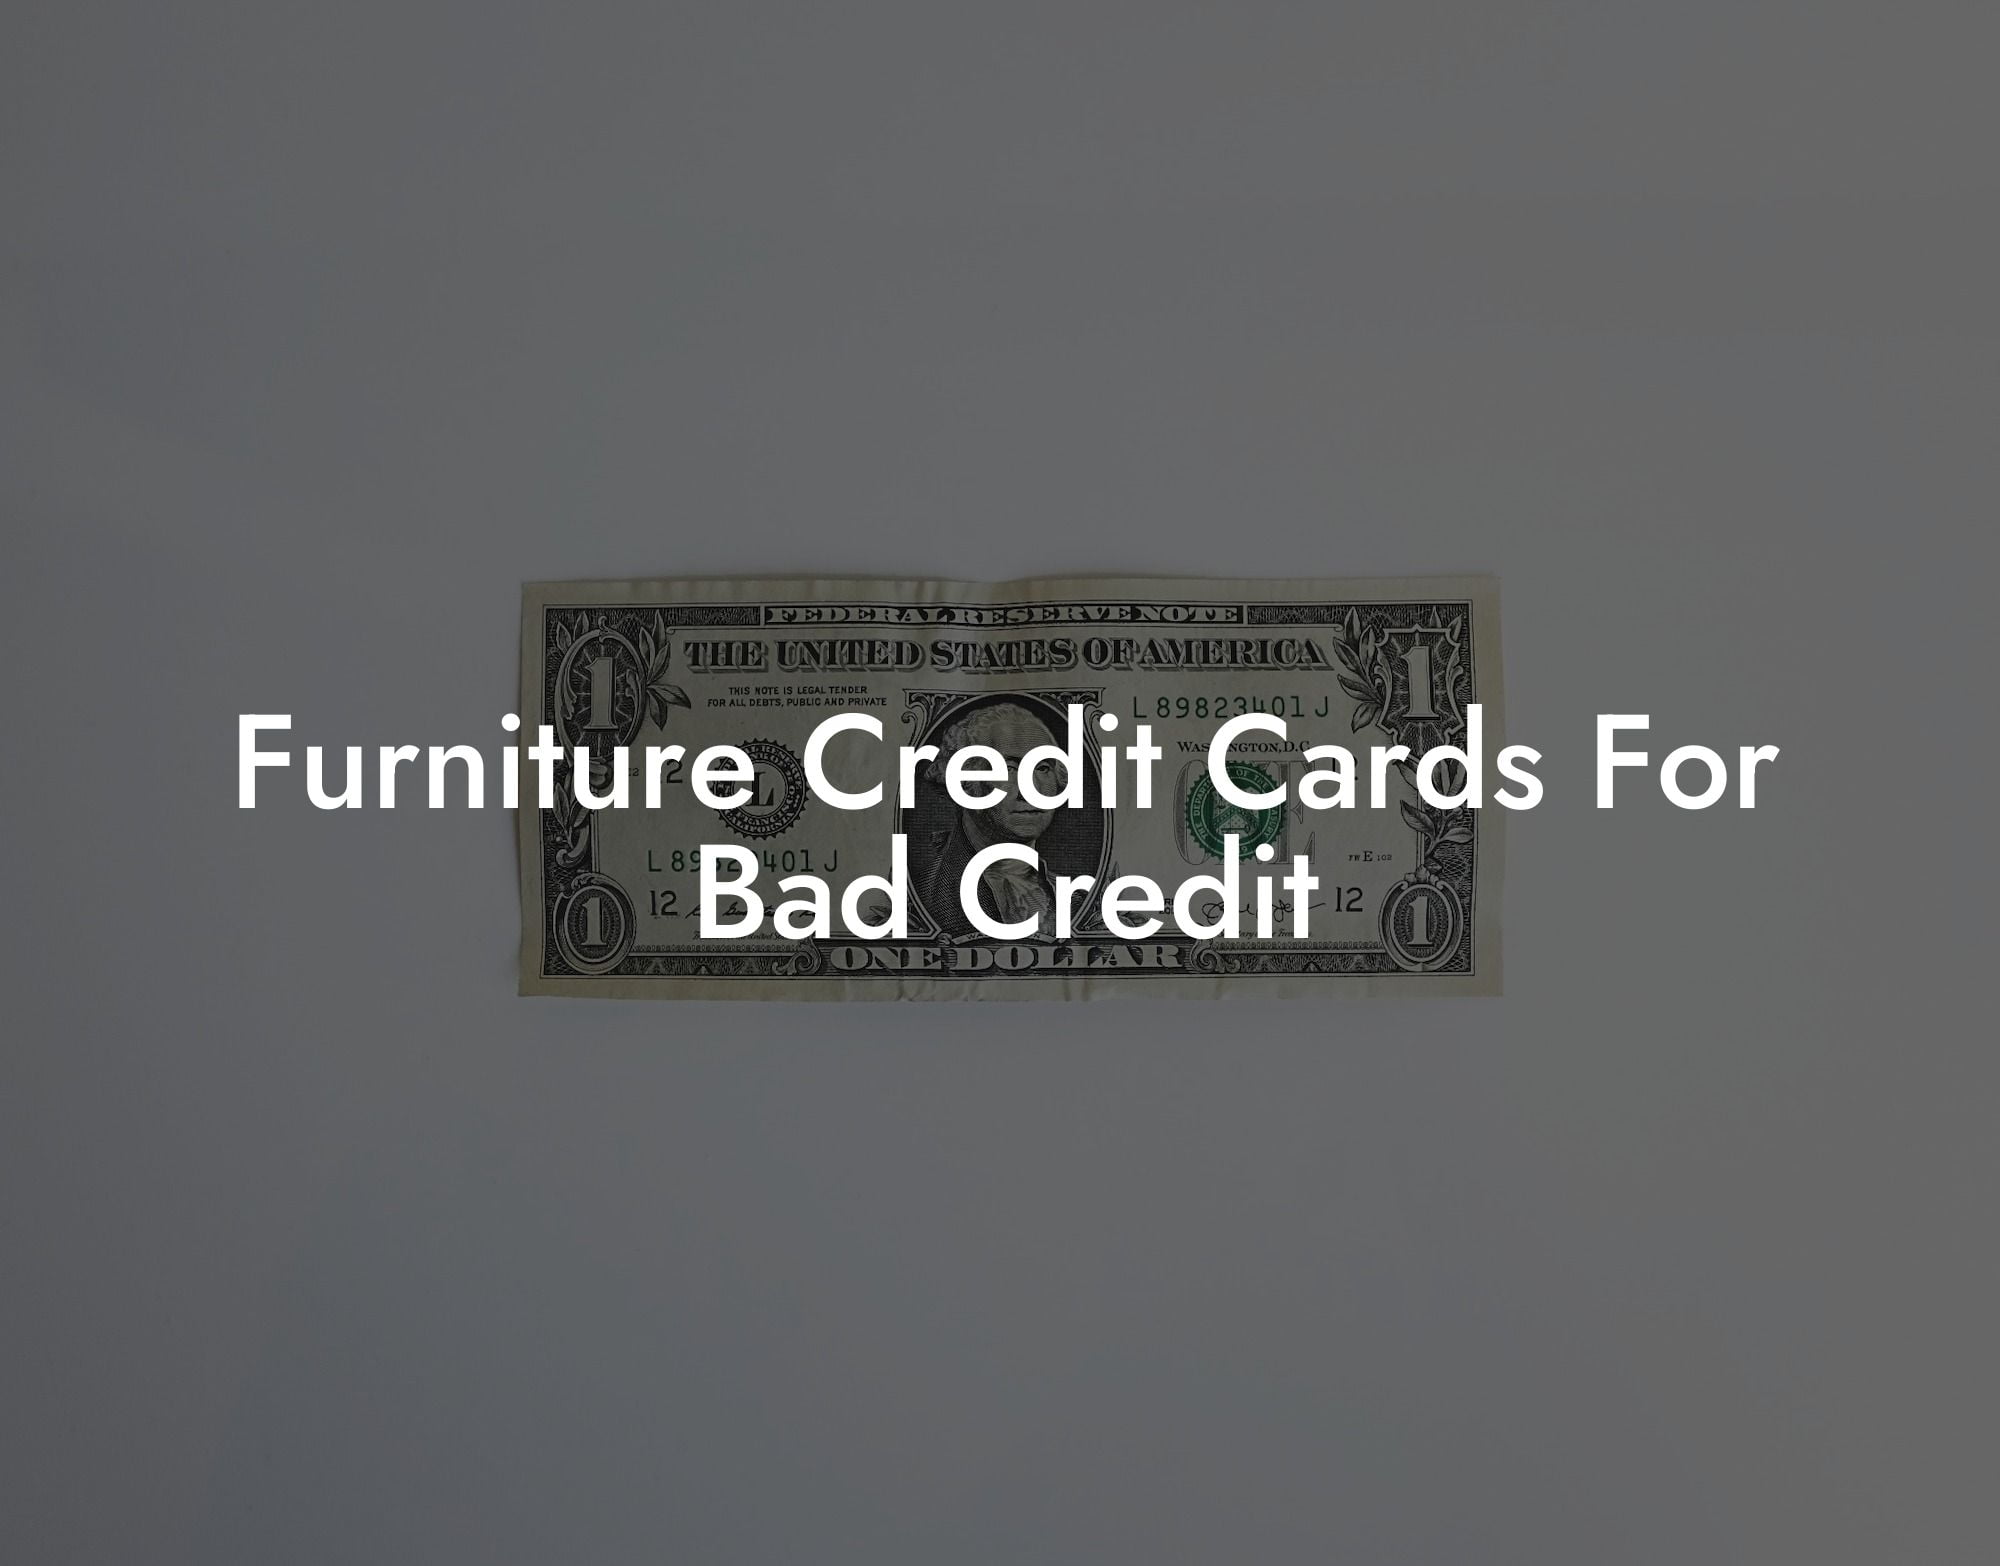 Furniture Credit Cards For Bad Credit